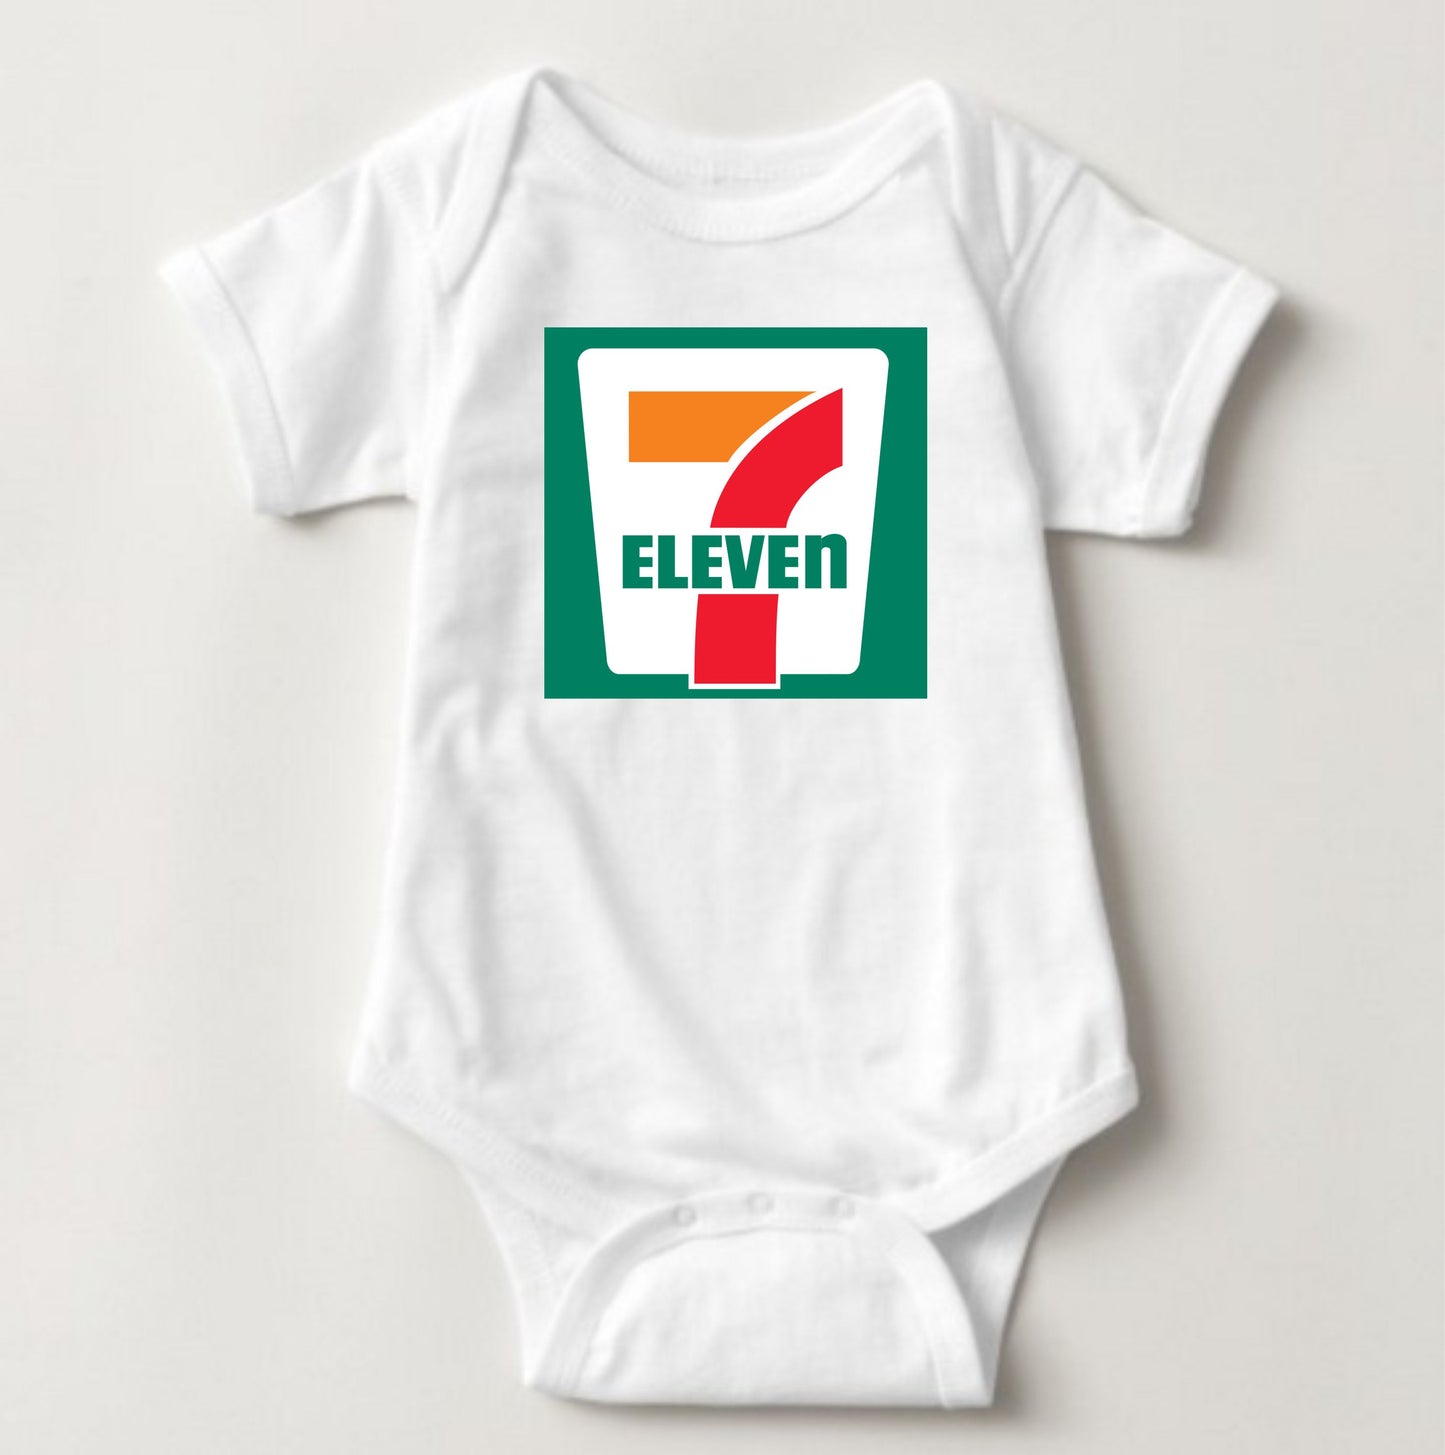 Baby Onesies Logo - SEVEN/ELEVEN